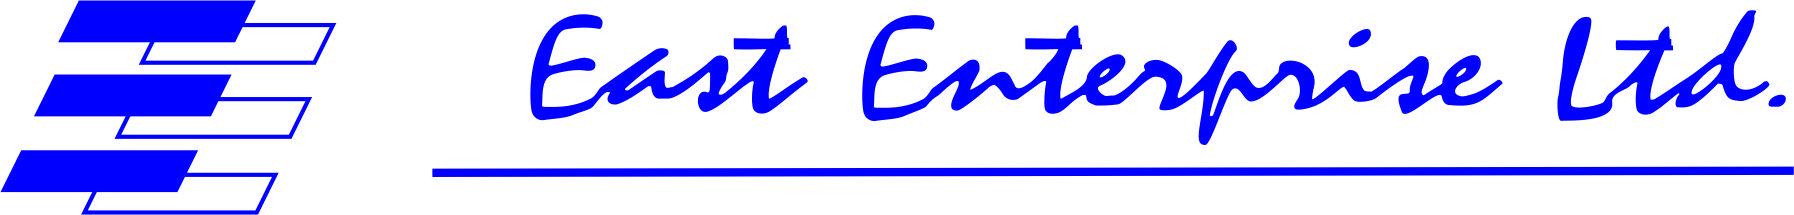 East Enterprise Ltd